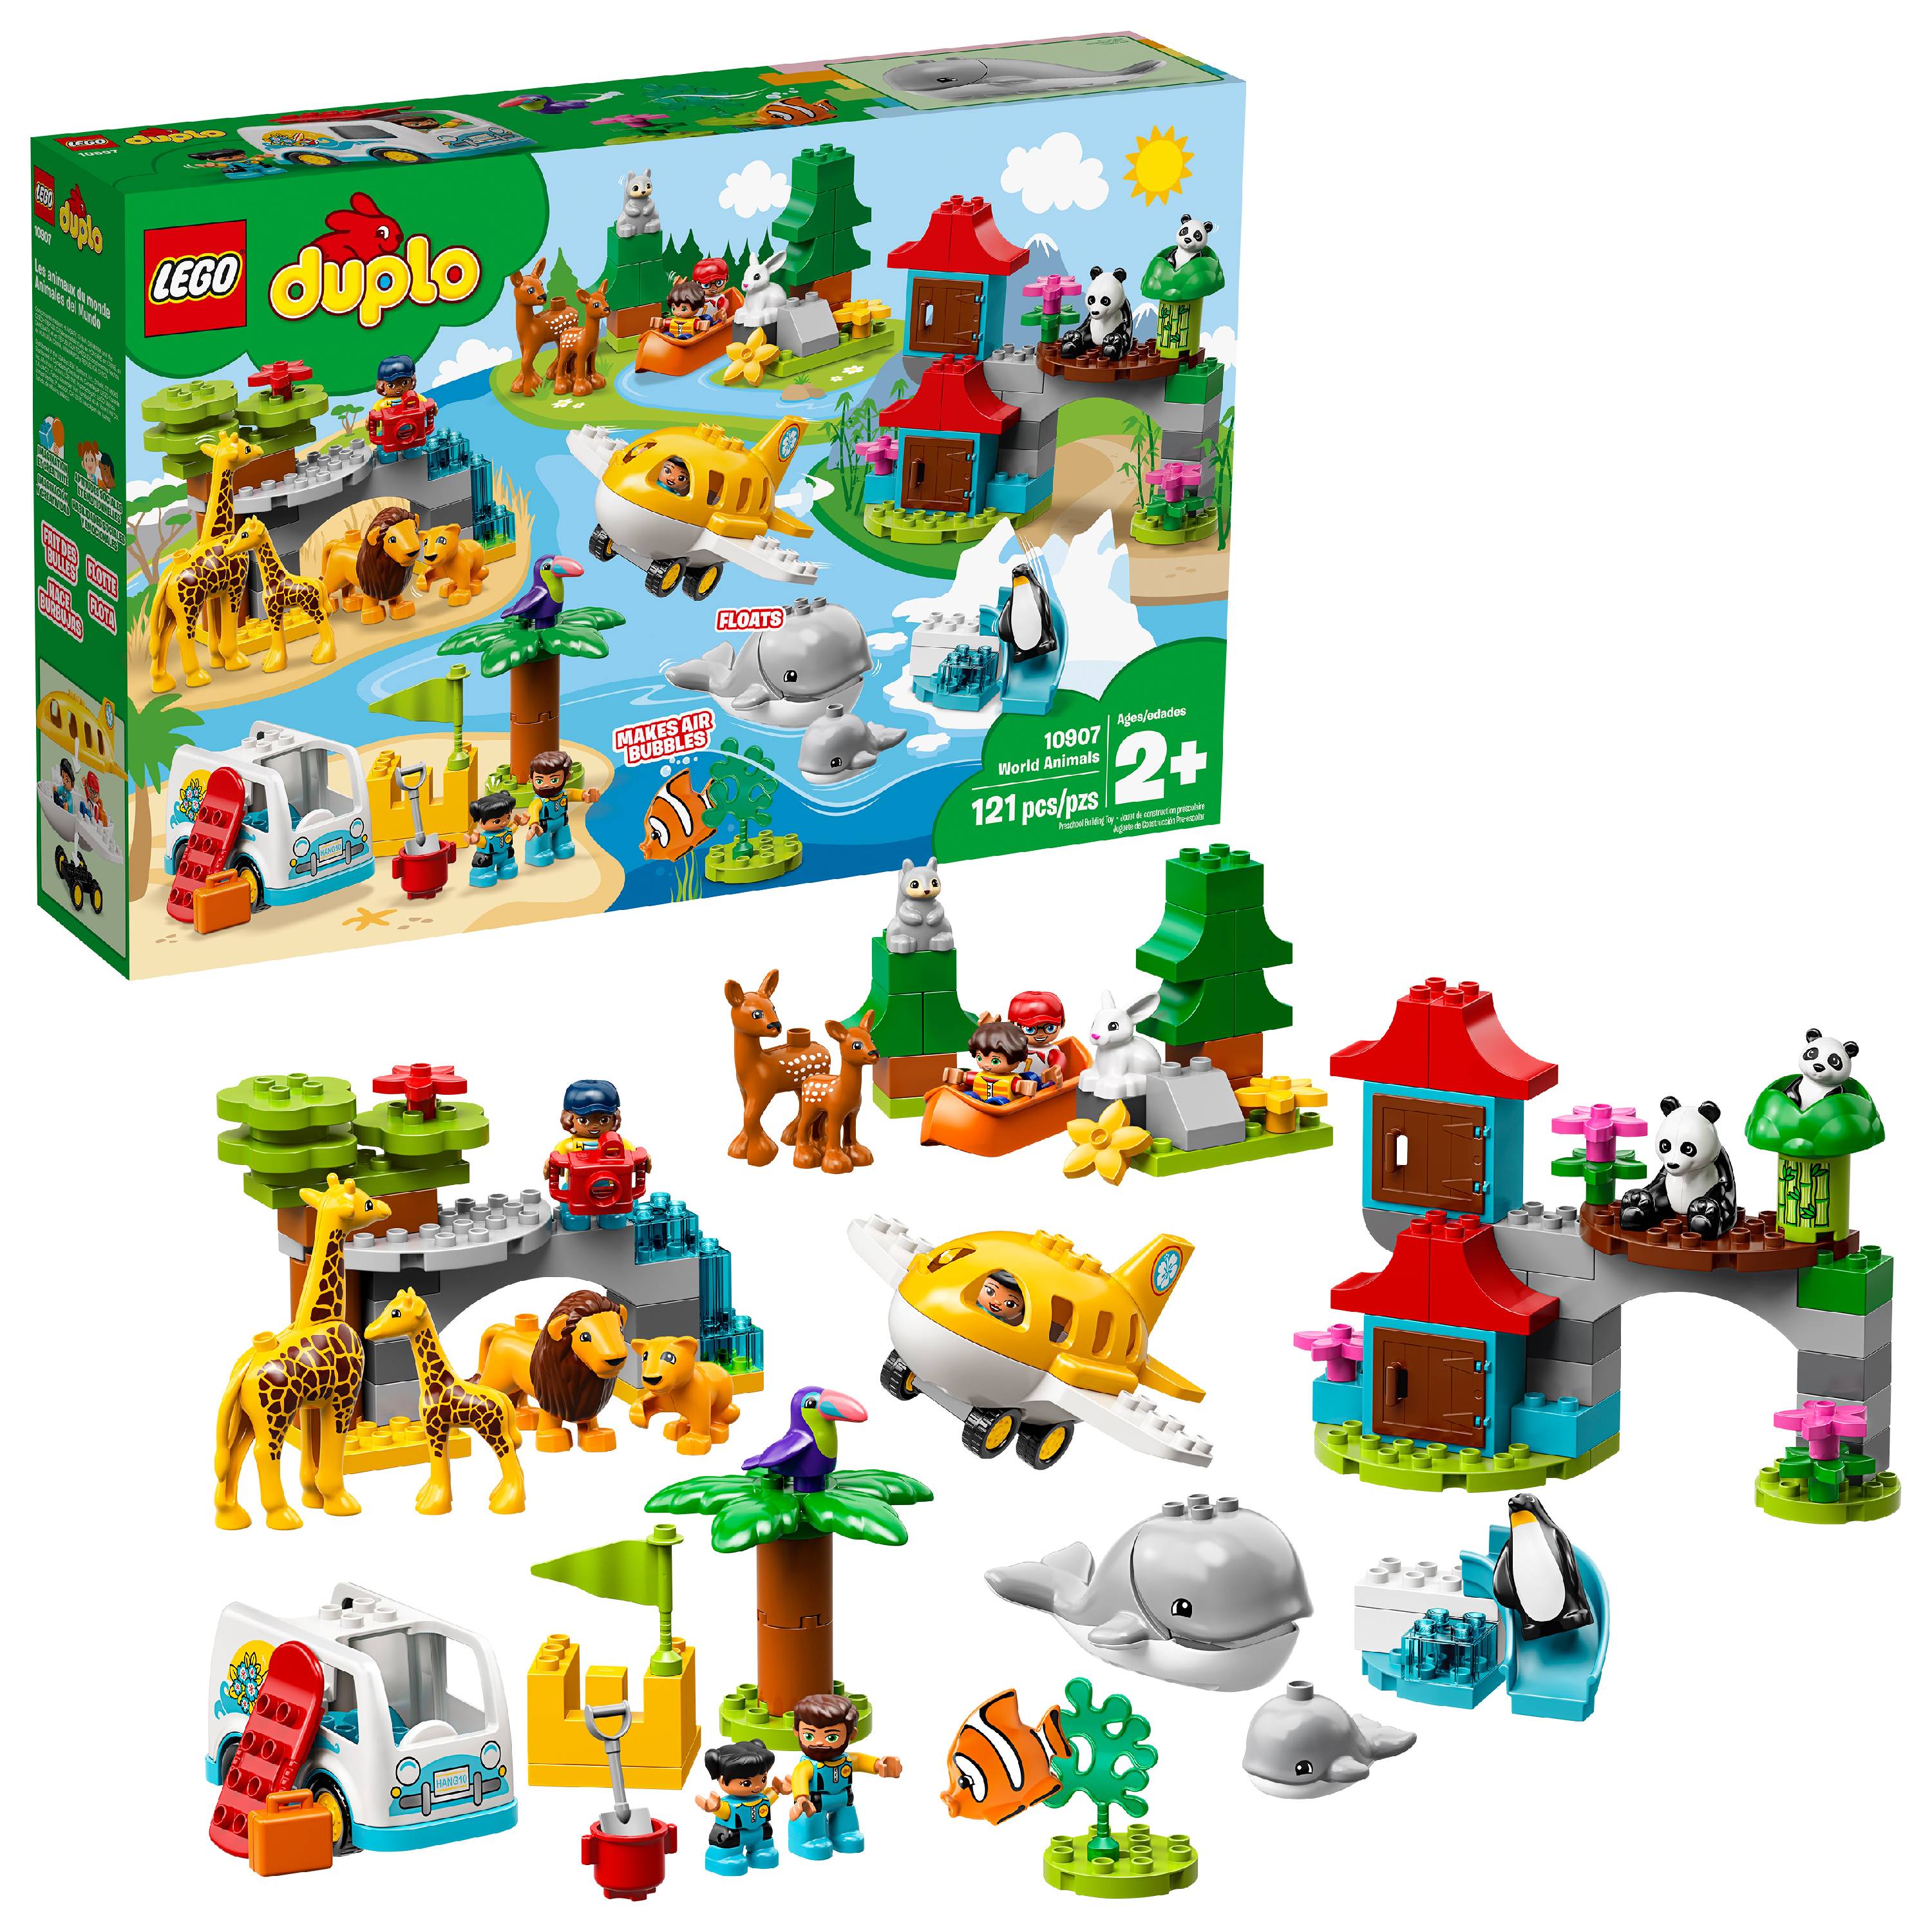 LEGO DUPLO Town World Animals 10907 Building Bricks (121 Pieces) - image 1 of 7